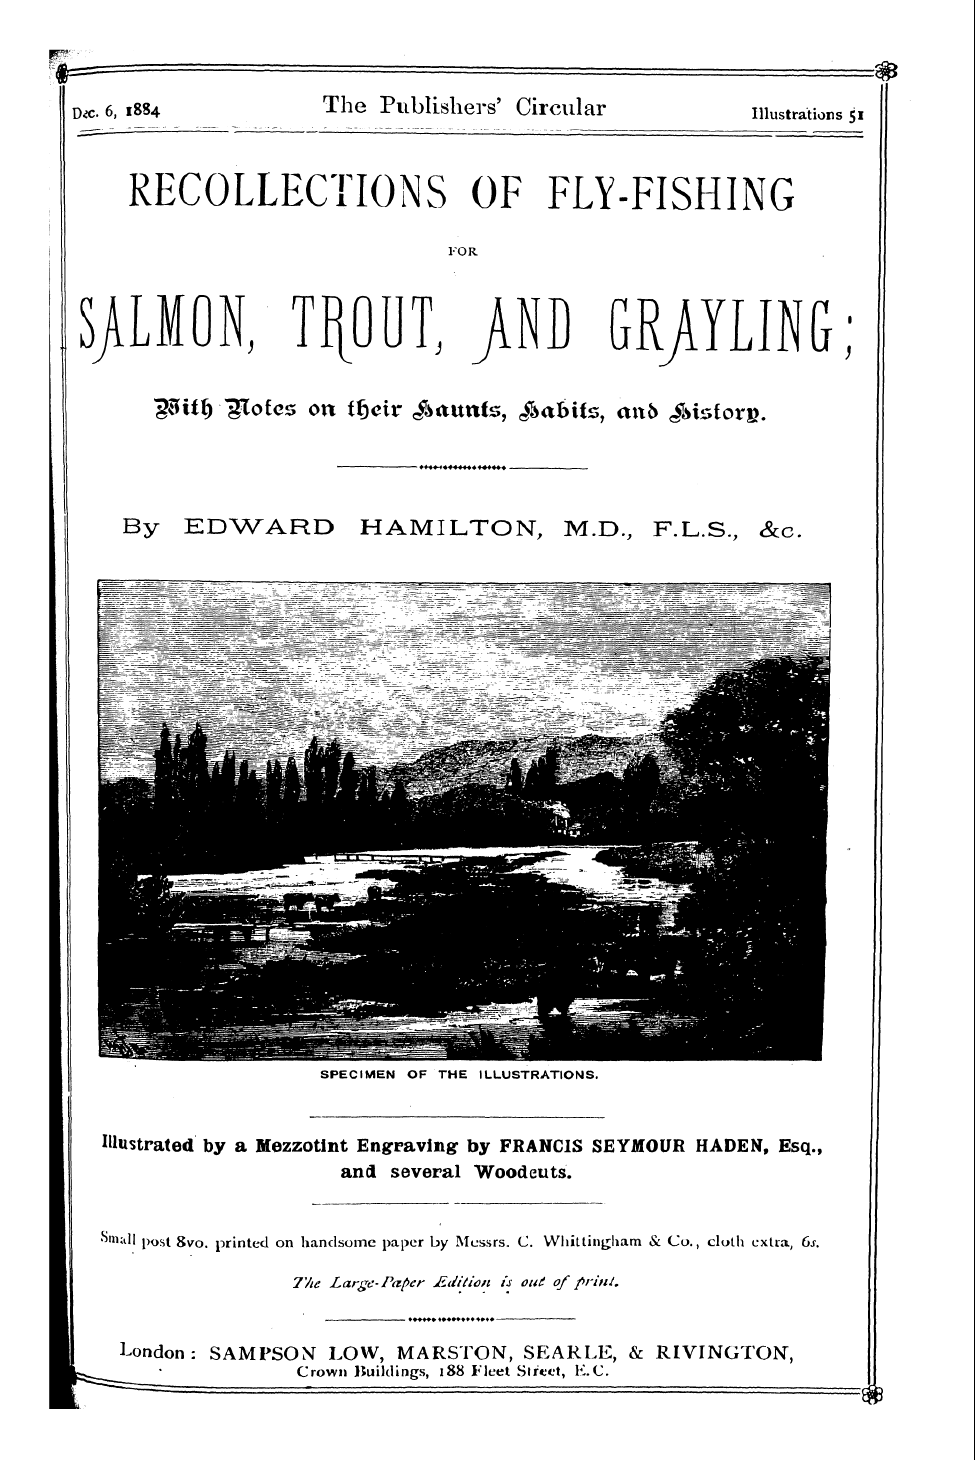 Publishers’ Circular (1880-1890): jS F Y, 1st edition: 149